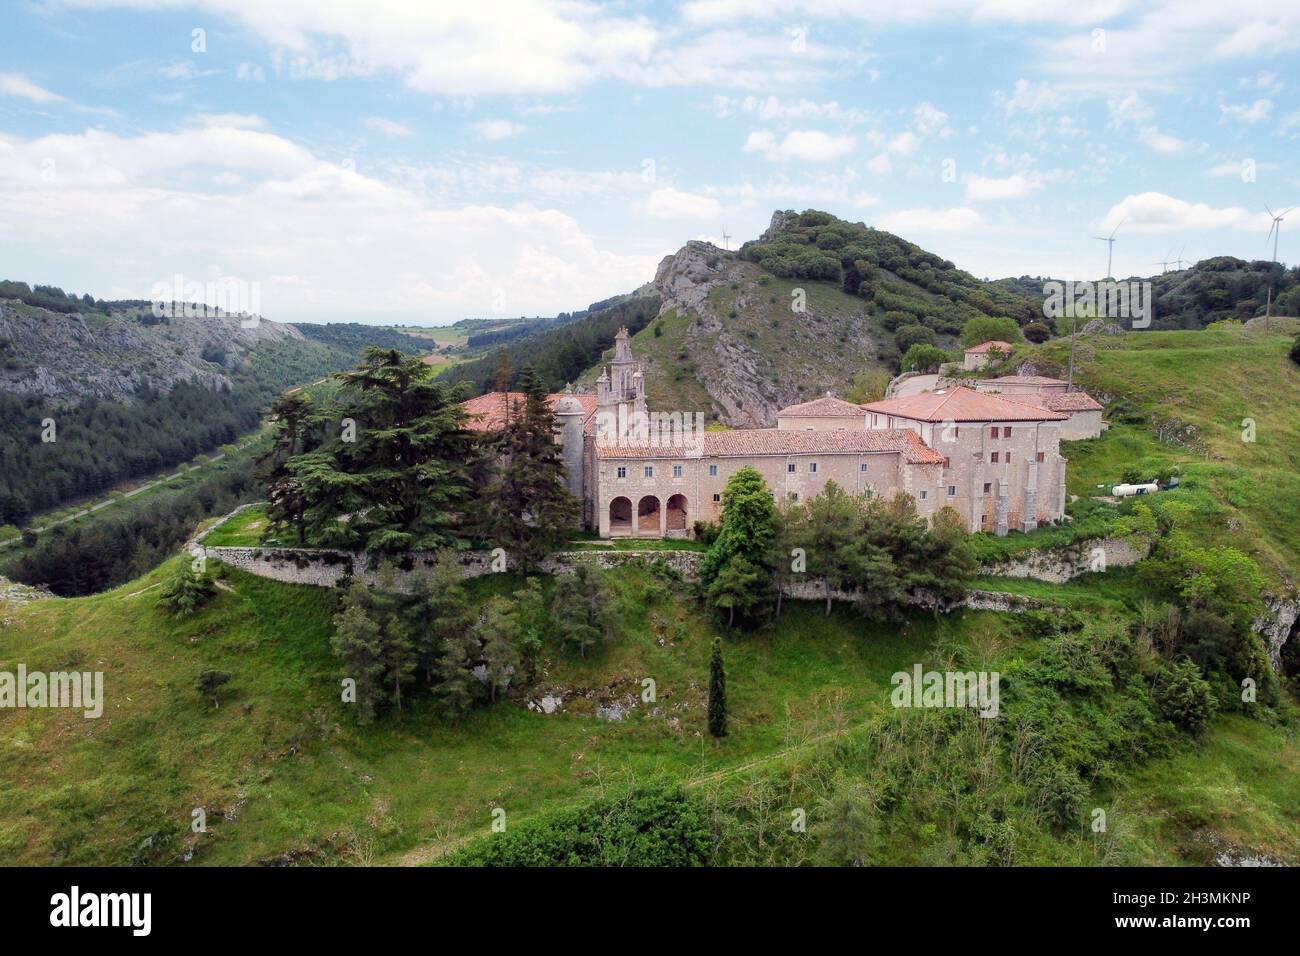 Aerial view of Santa Casilda shrine, La Bureba, Burgos province, Castile-Leon. Stock Photo